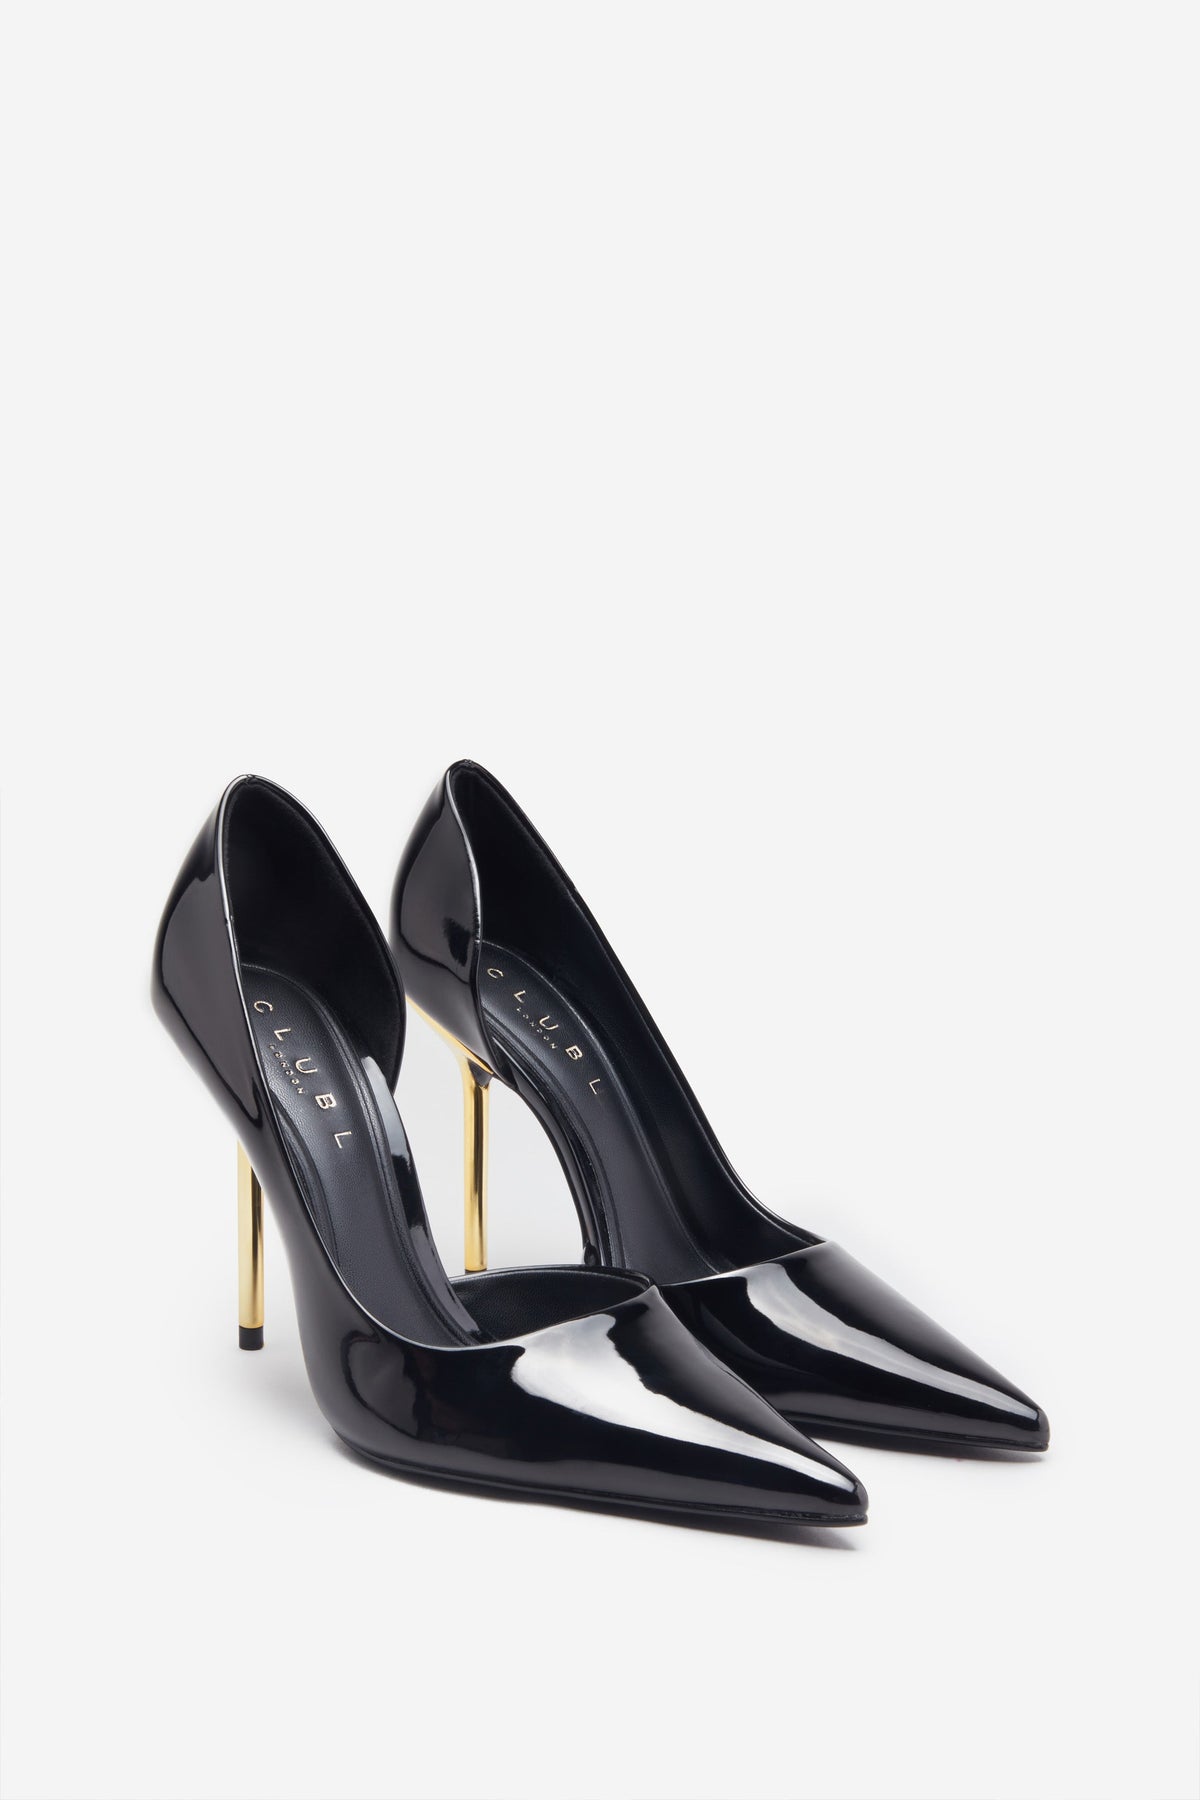 Buy brauch Black Stylish Strap Prism Block Heel for Women/Girls at Amazon.in